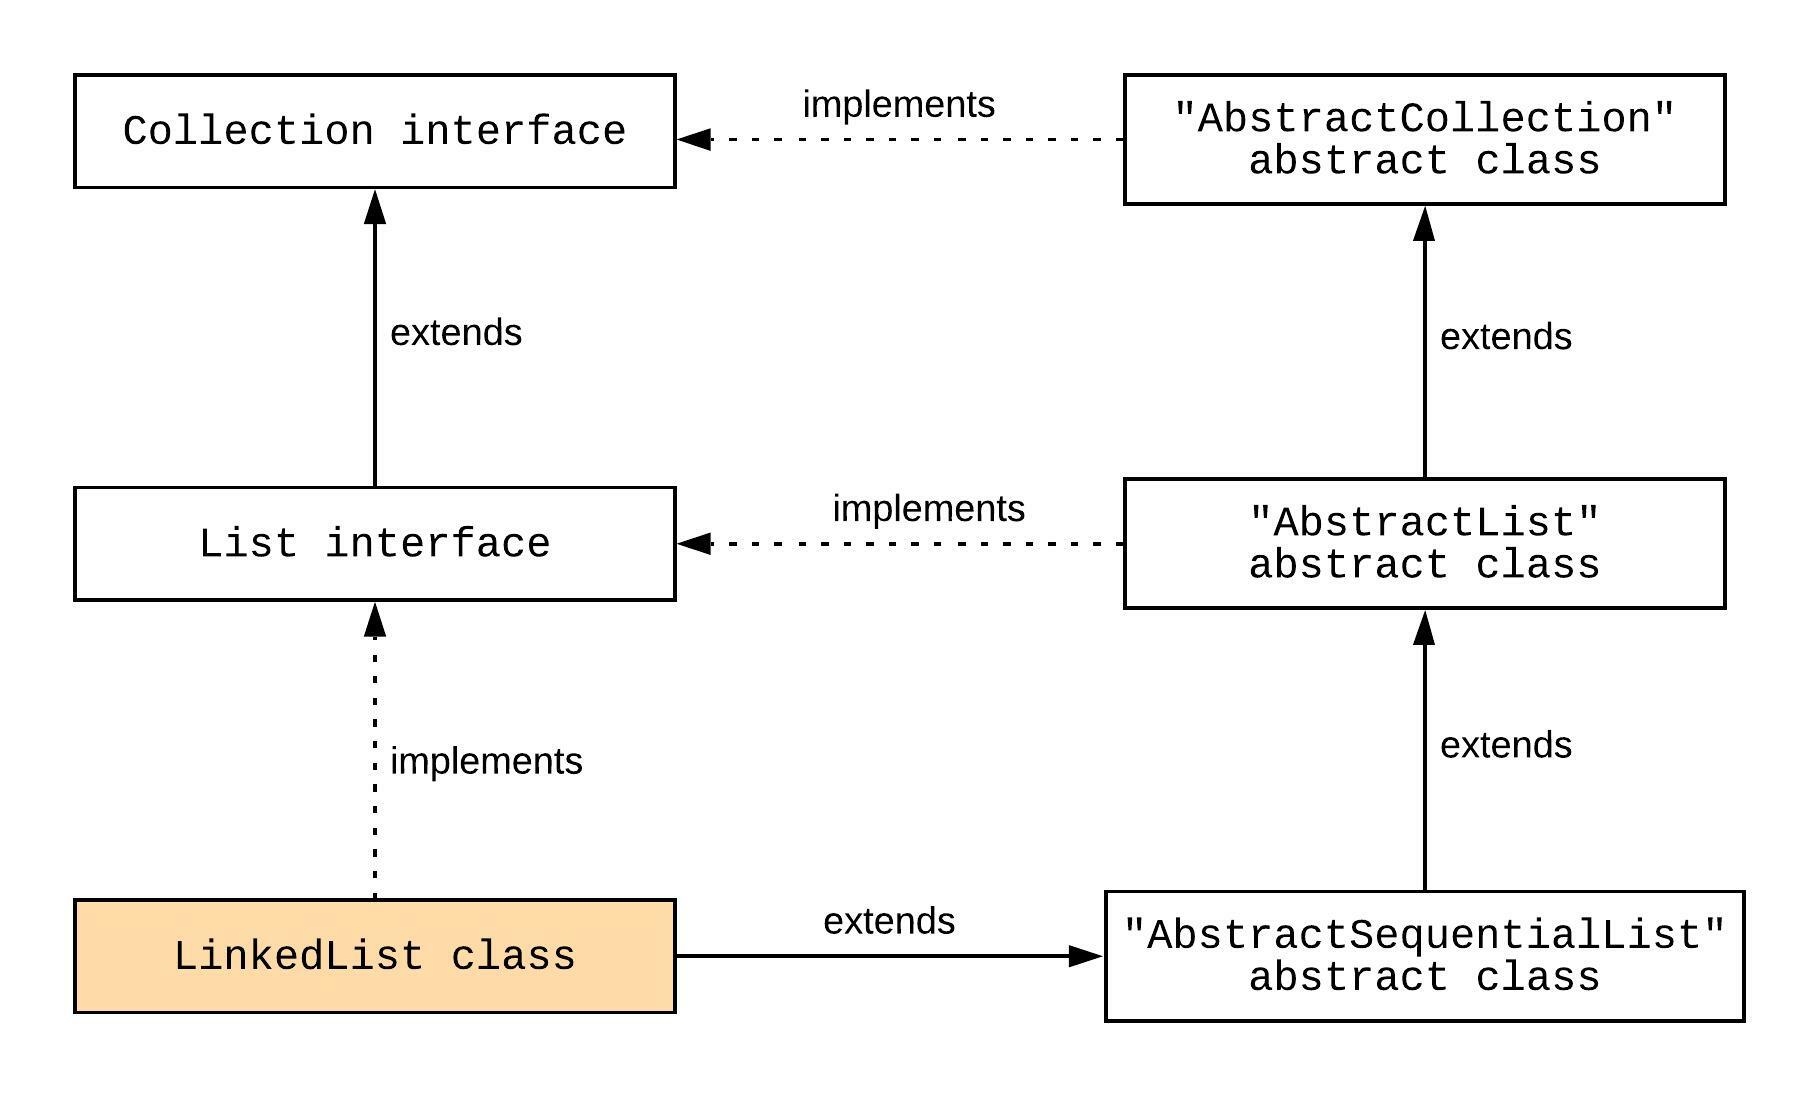 LinkedList class structure